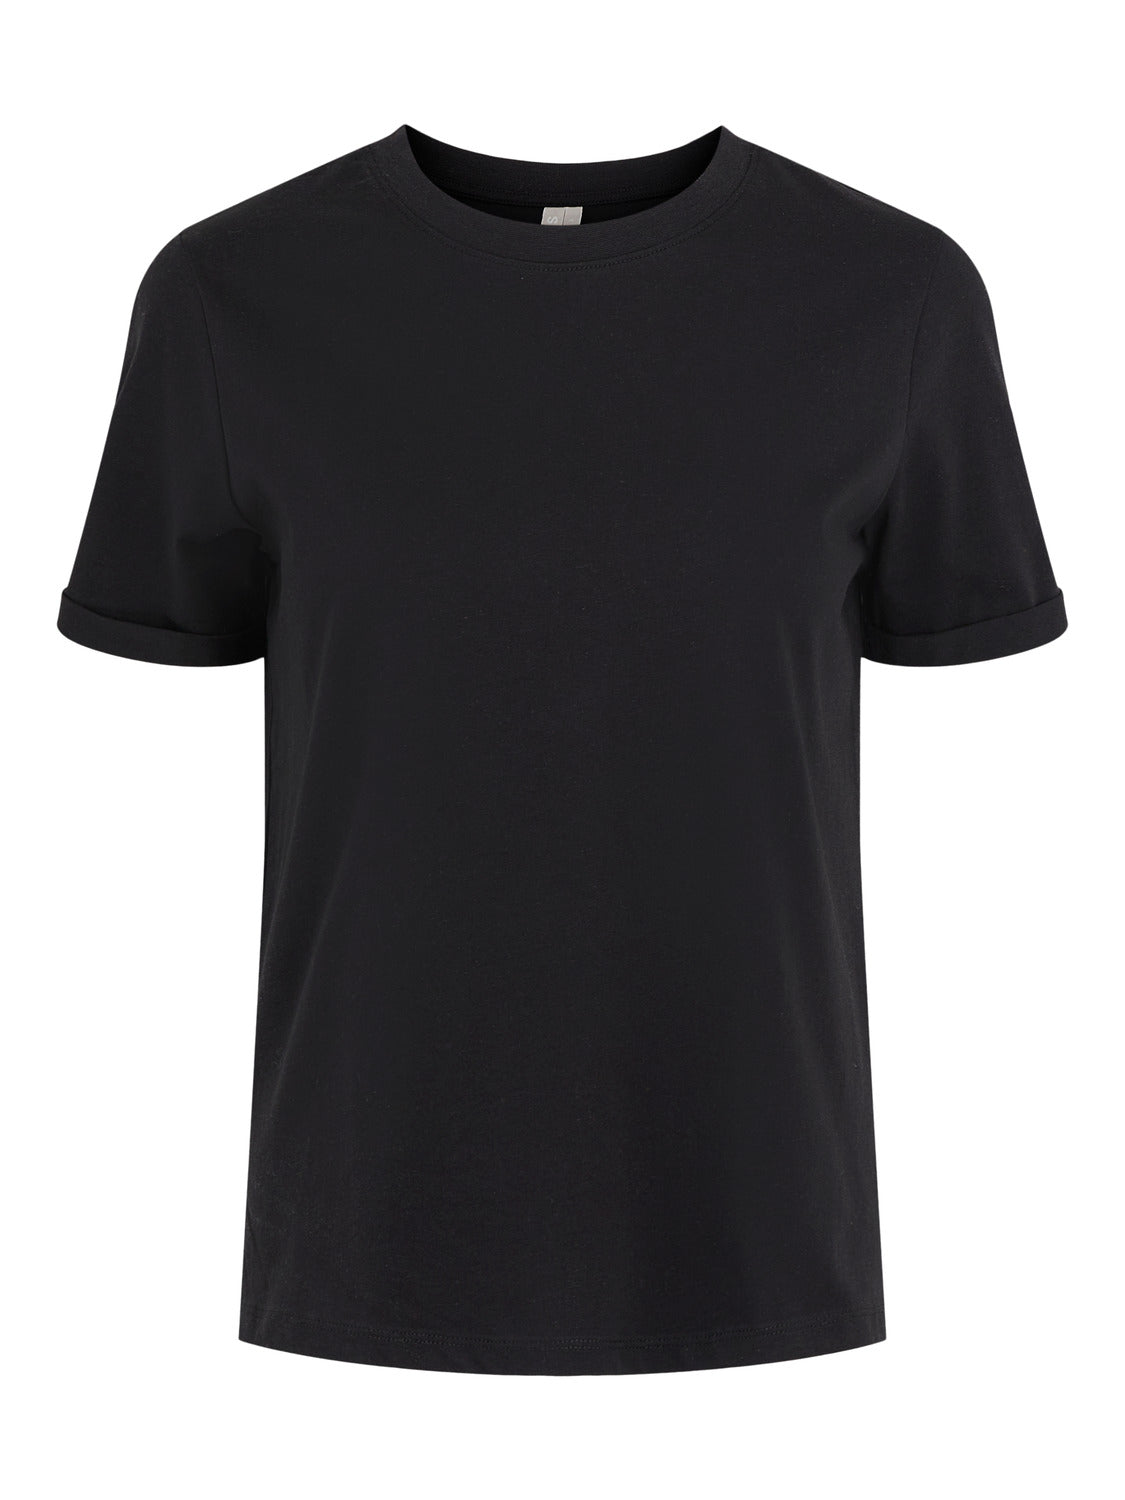 PCRIA T-shirt - black